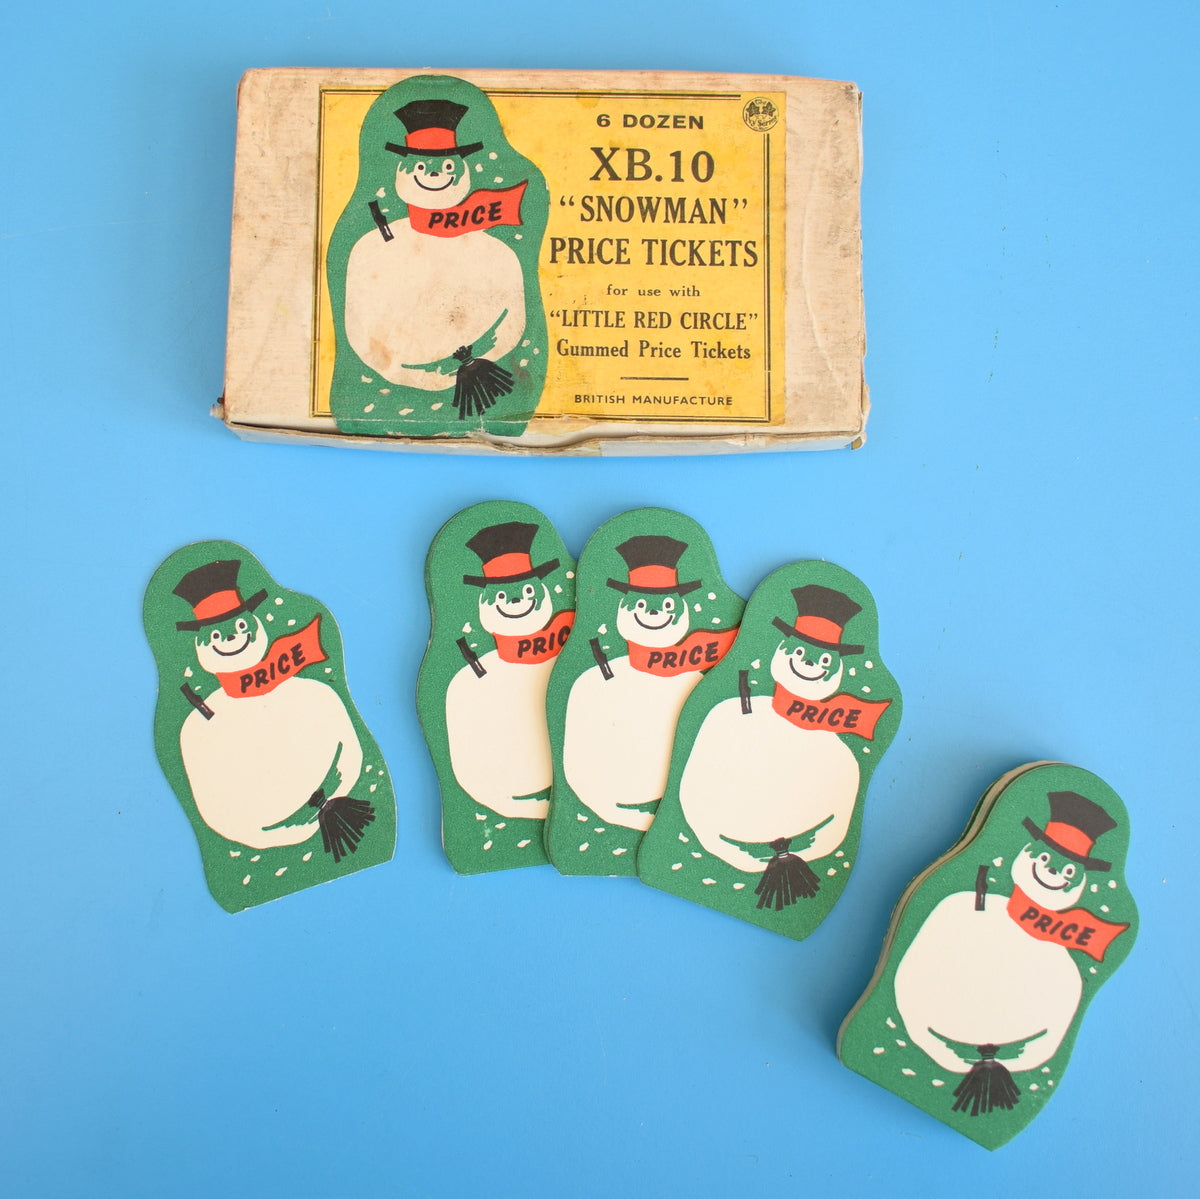 Vintage 1950s Festive Retail Tags - Snowman Price Tickets